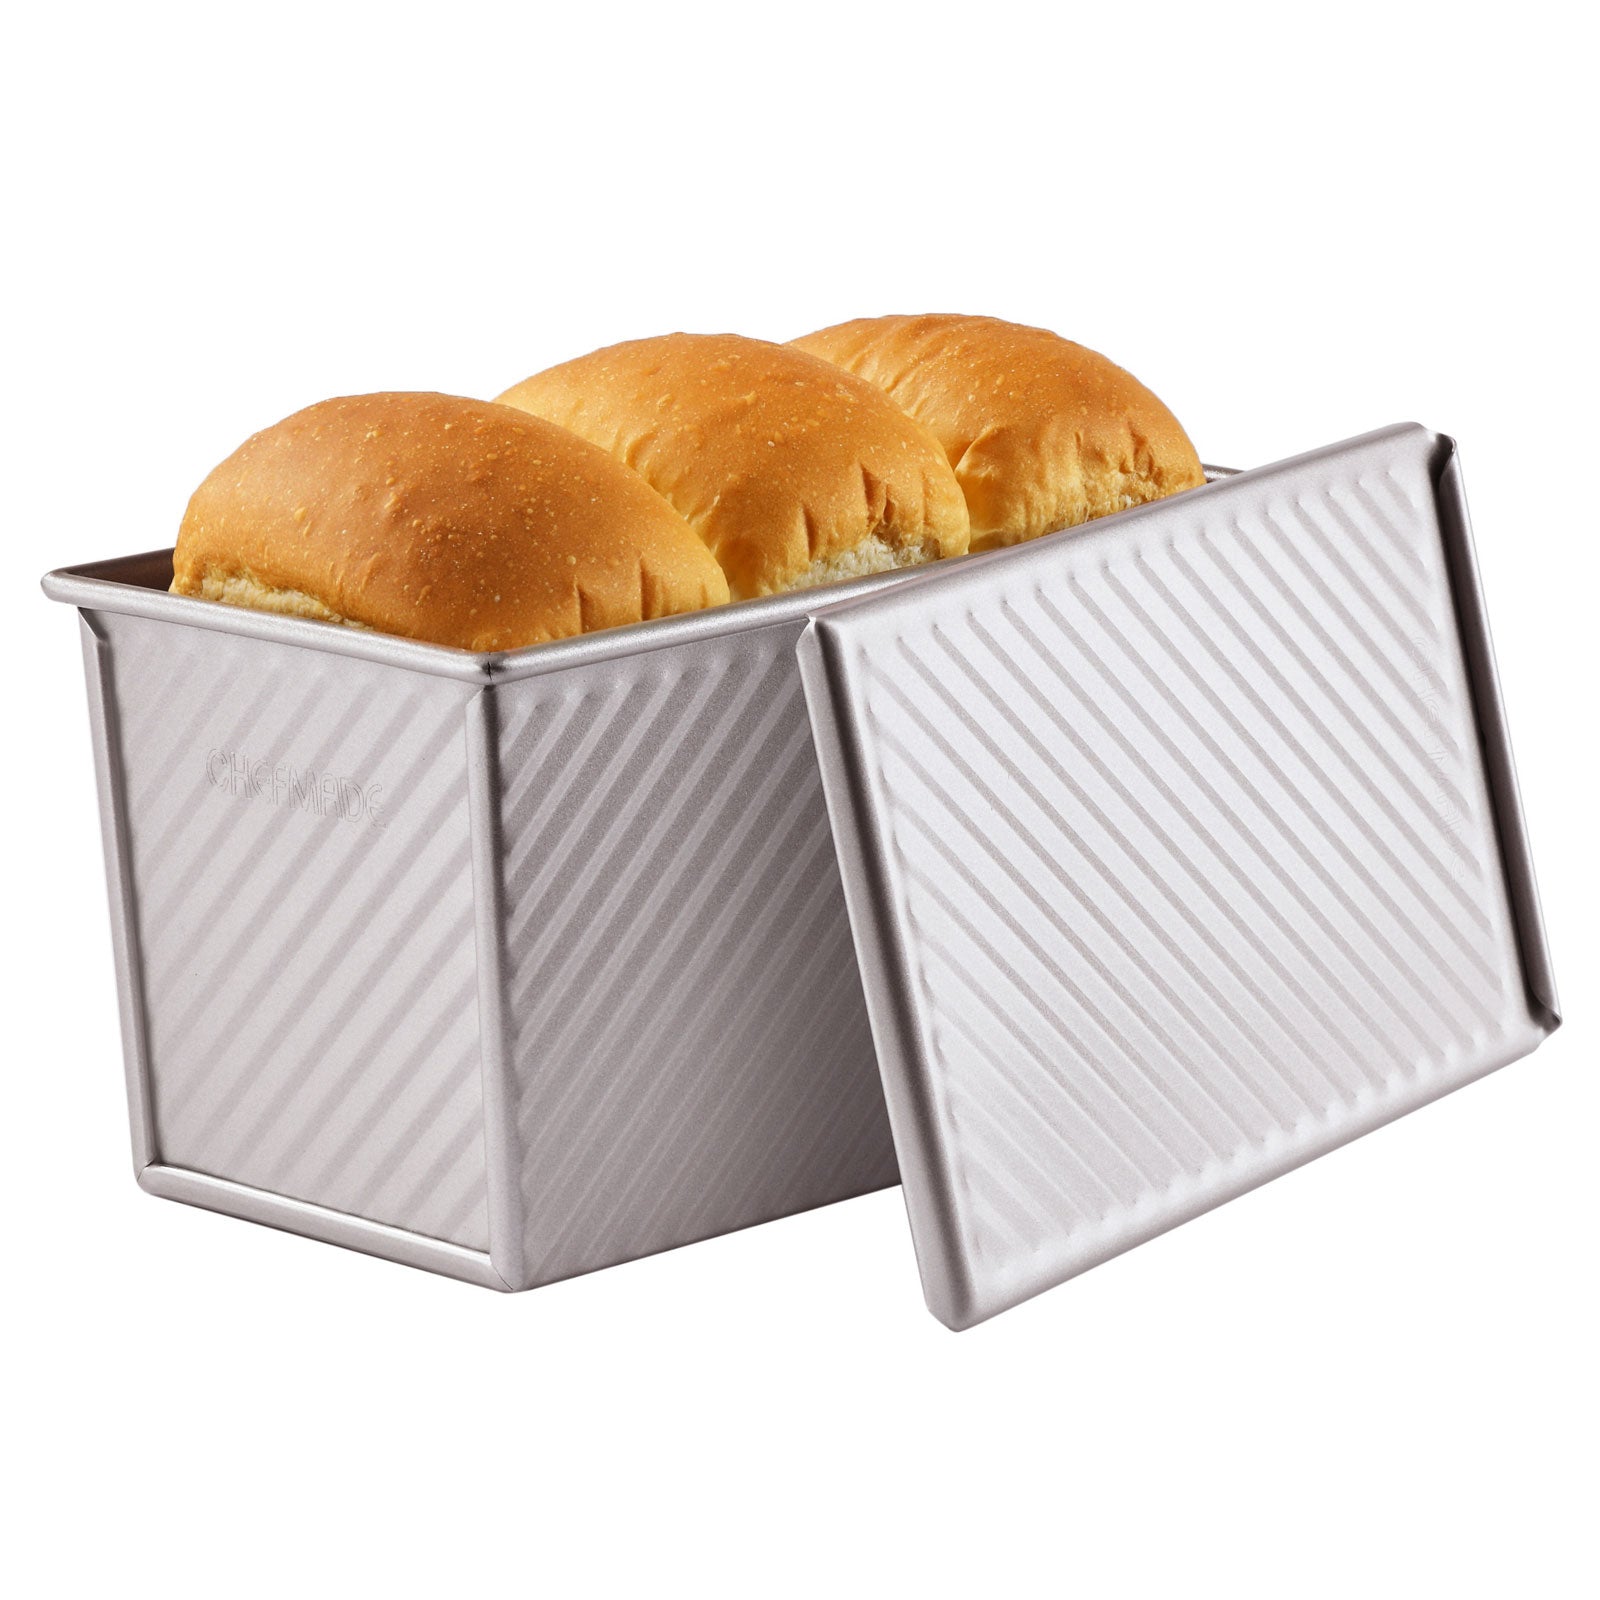 Buy Wholesale China Sandwich Box Toast Box Plastic Bread Buddy Loaf Bread  Keeper Sandwich Bread Box Holder Dispenser & Lunch Box at USD 0.5